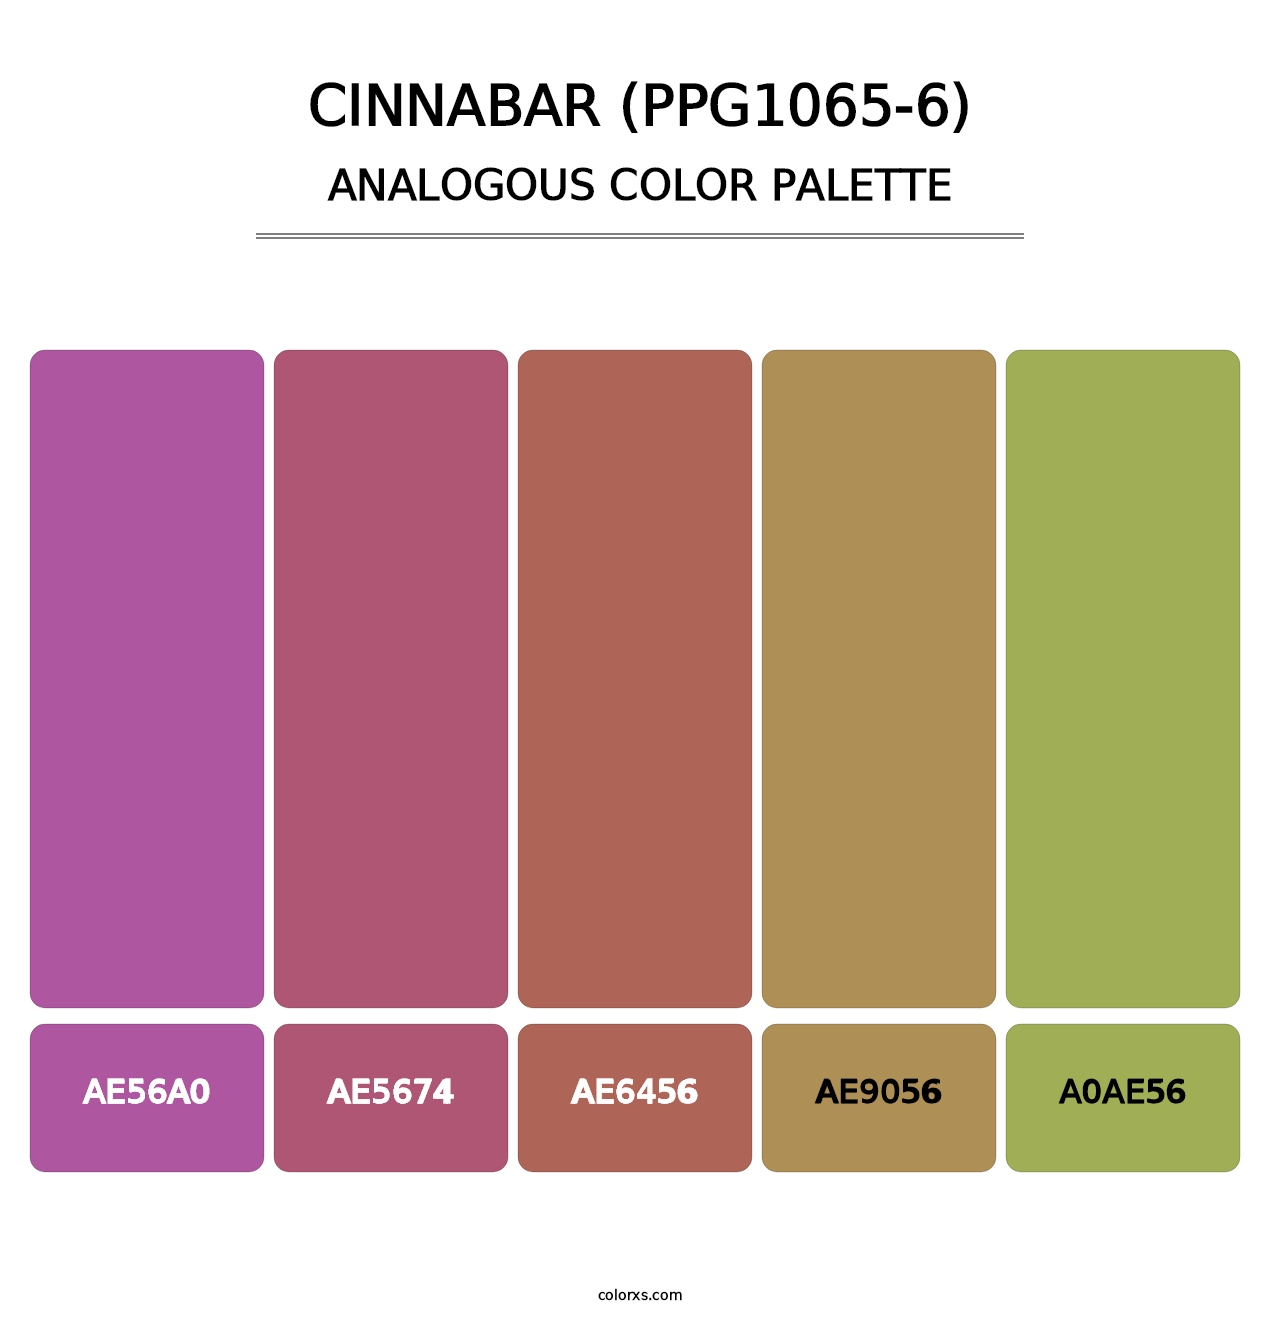 Cinnabar (PPG1065-6) - Analogous Color Palette